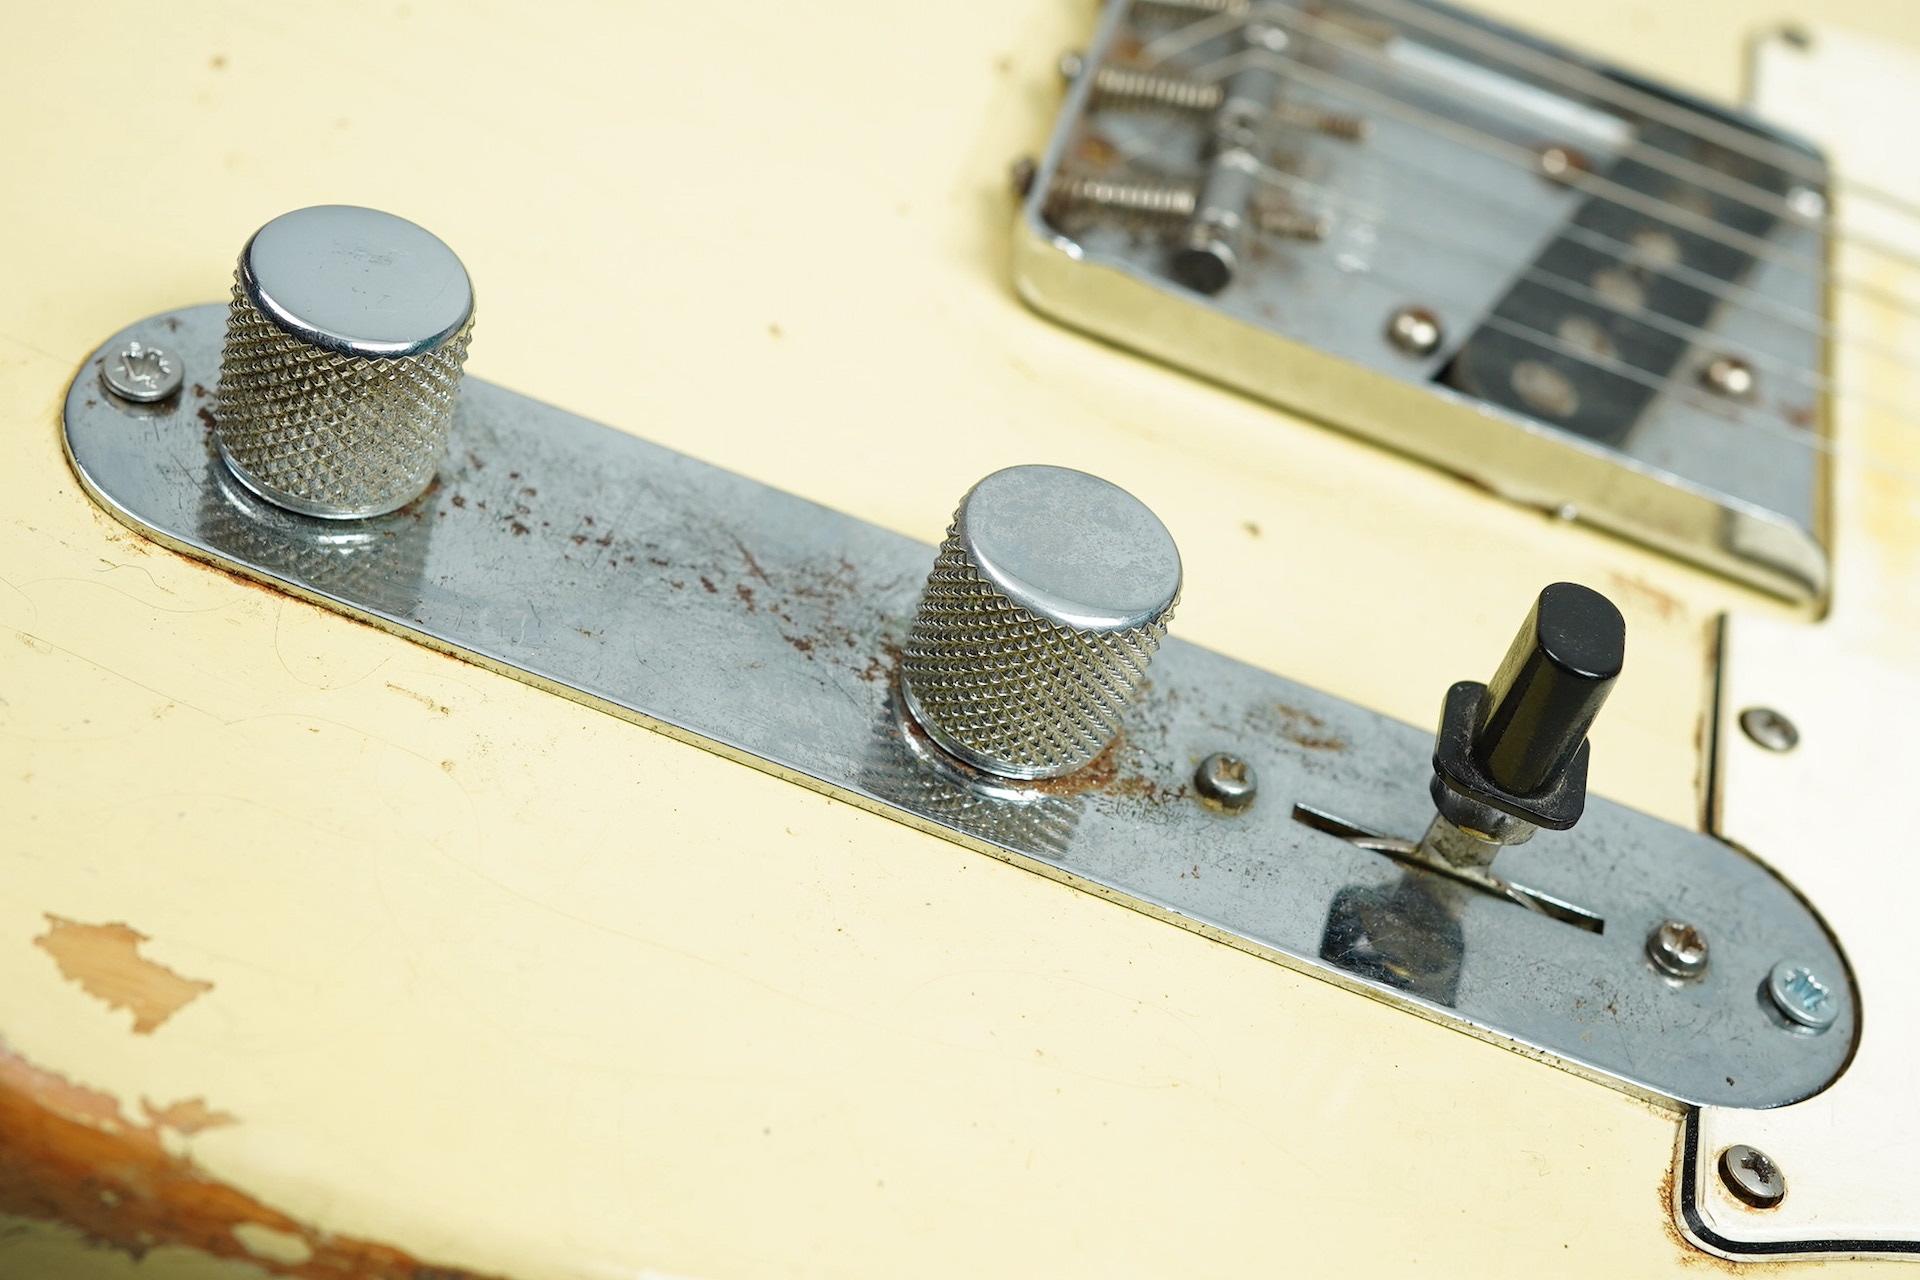 1974 Fender Telecaster Blonde